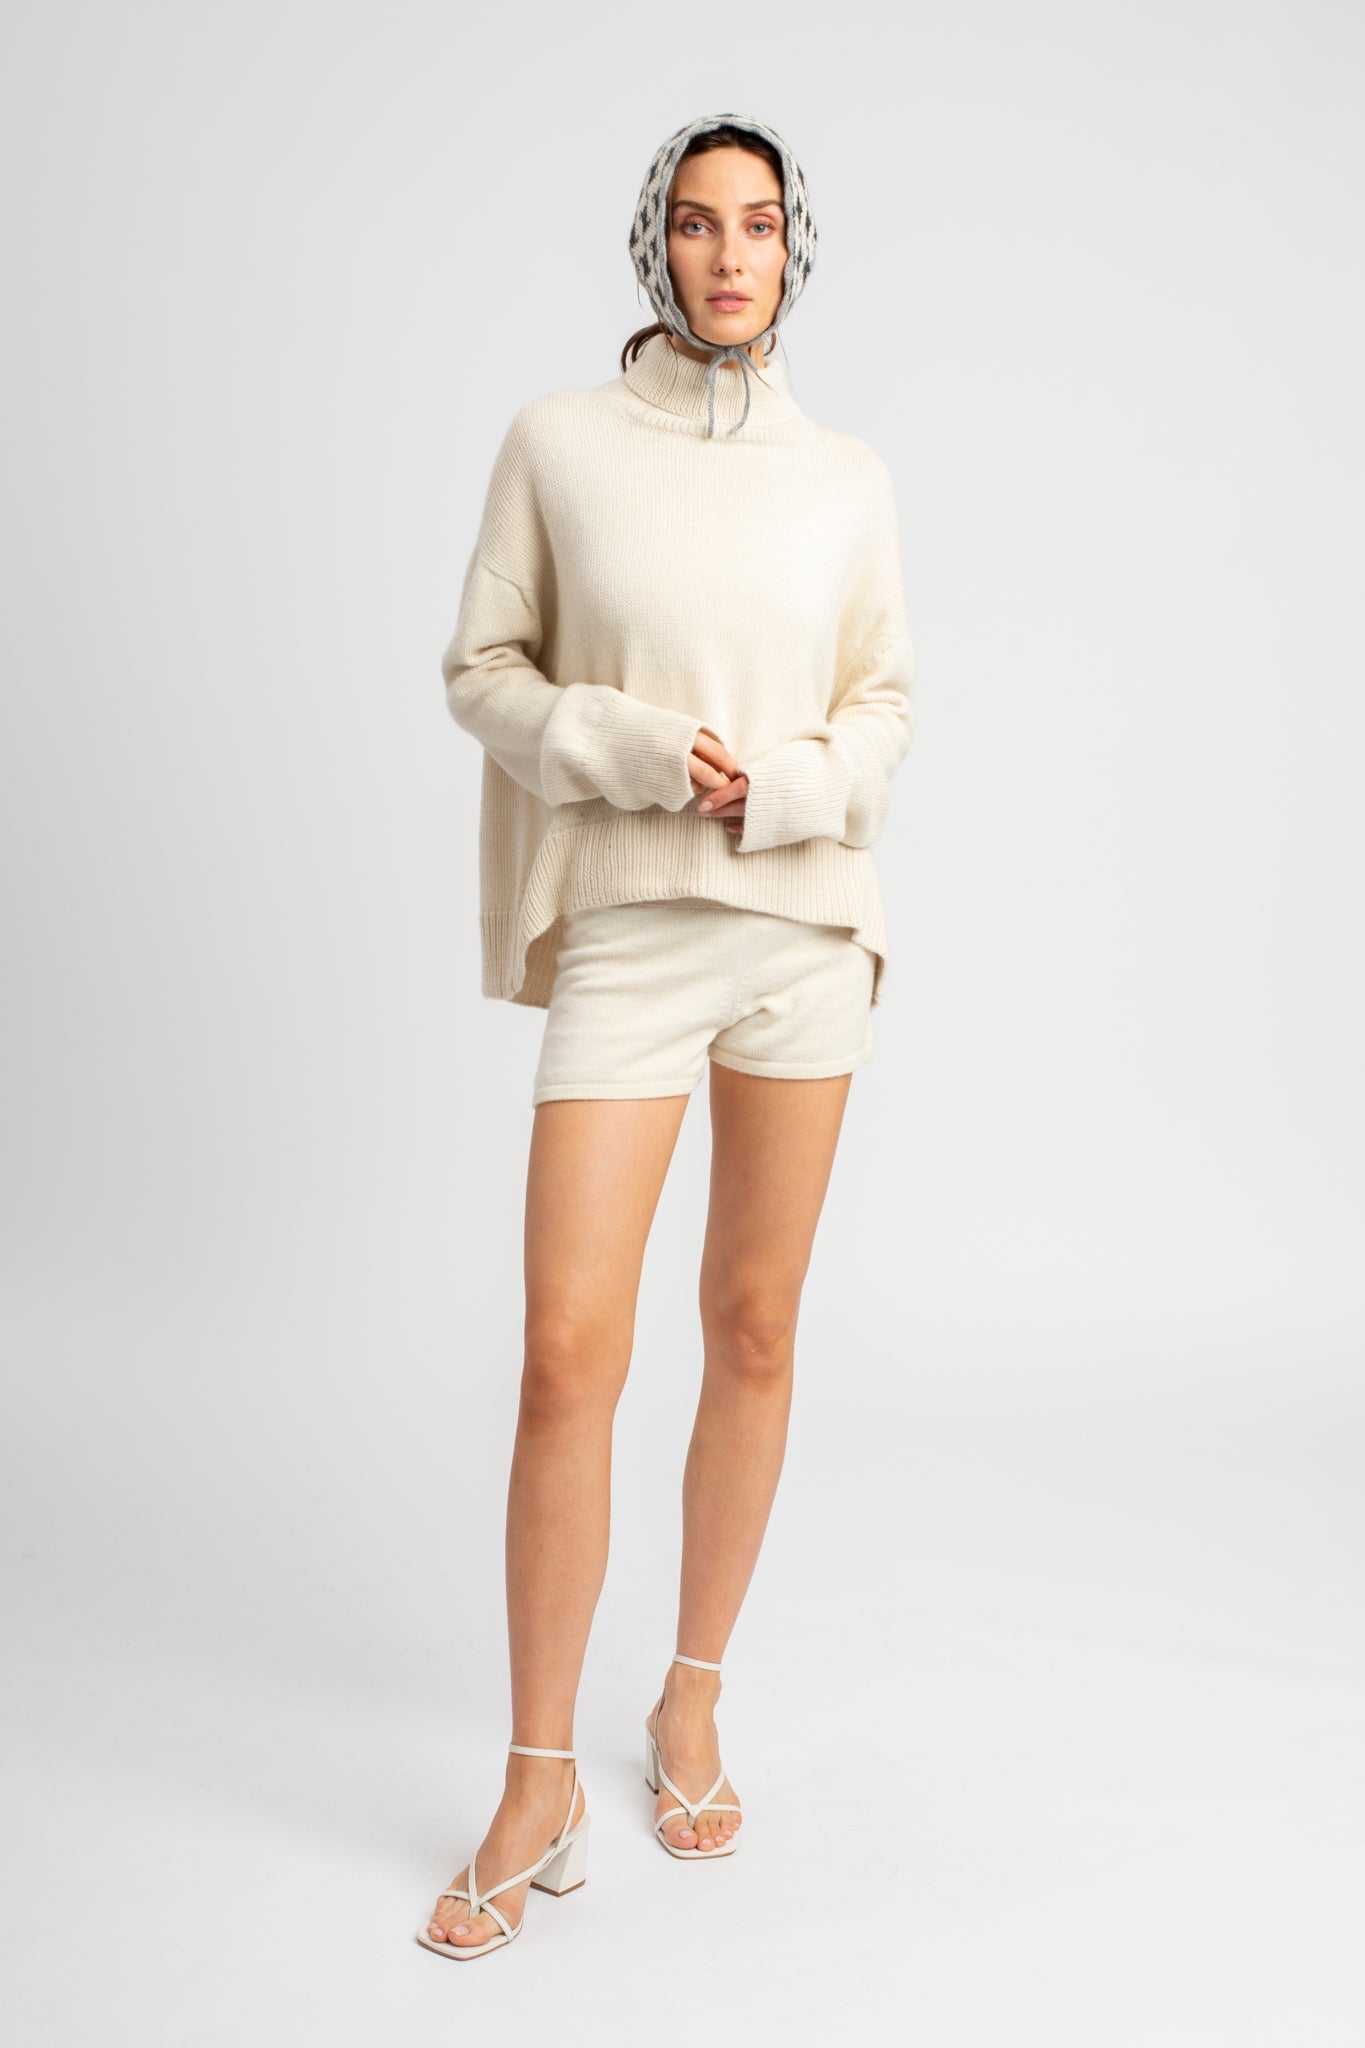 Model wearing turtleneck oversized sweater in white alpaca wool, front standing